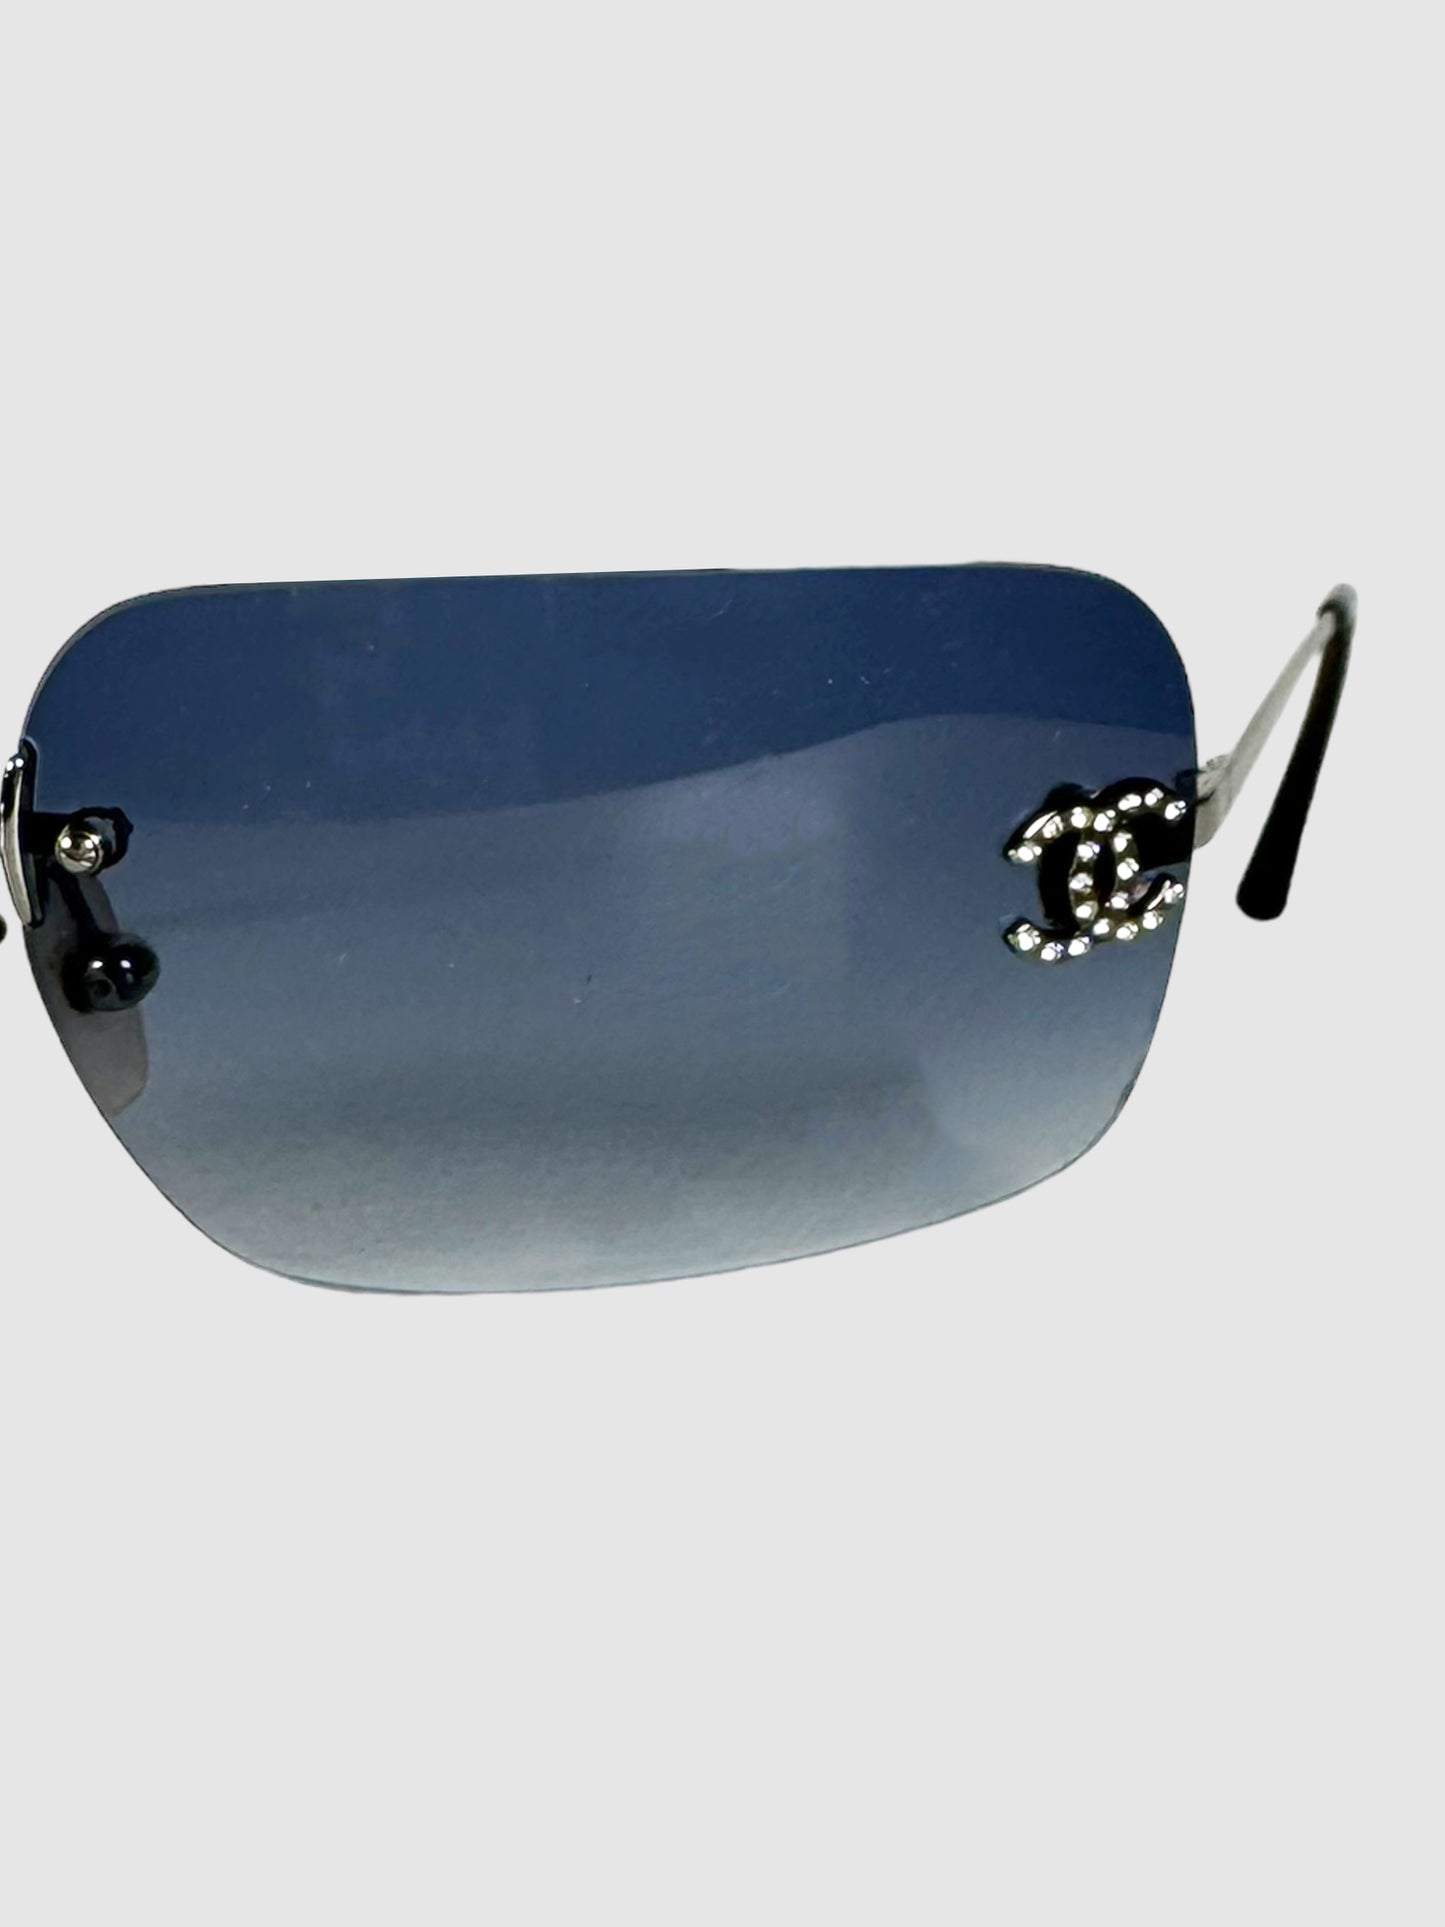 Chanel Tinted Rectangular Sunglasses